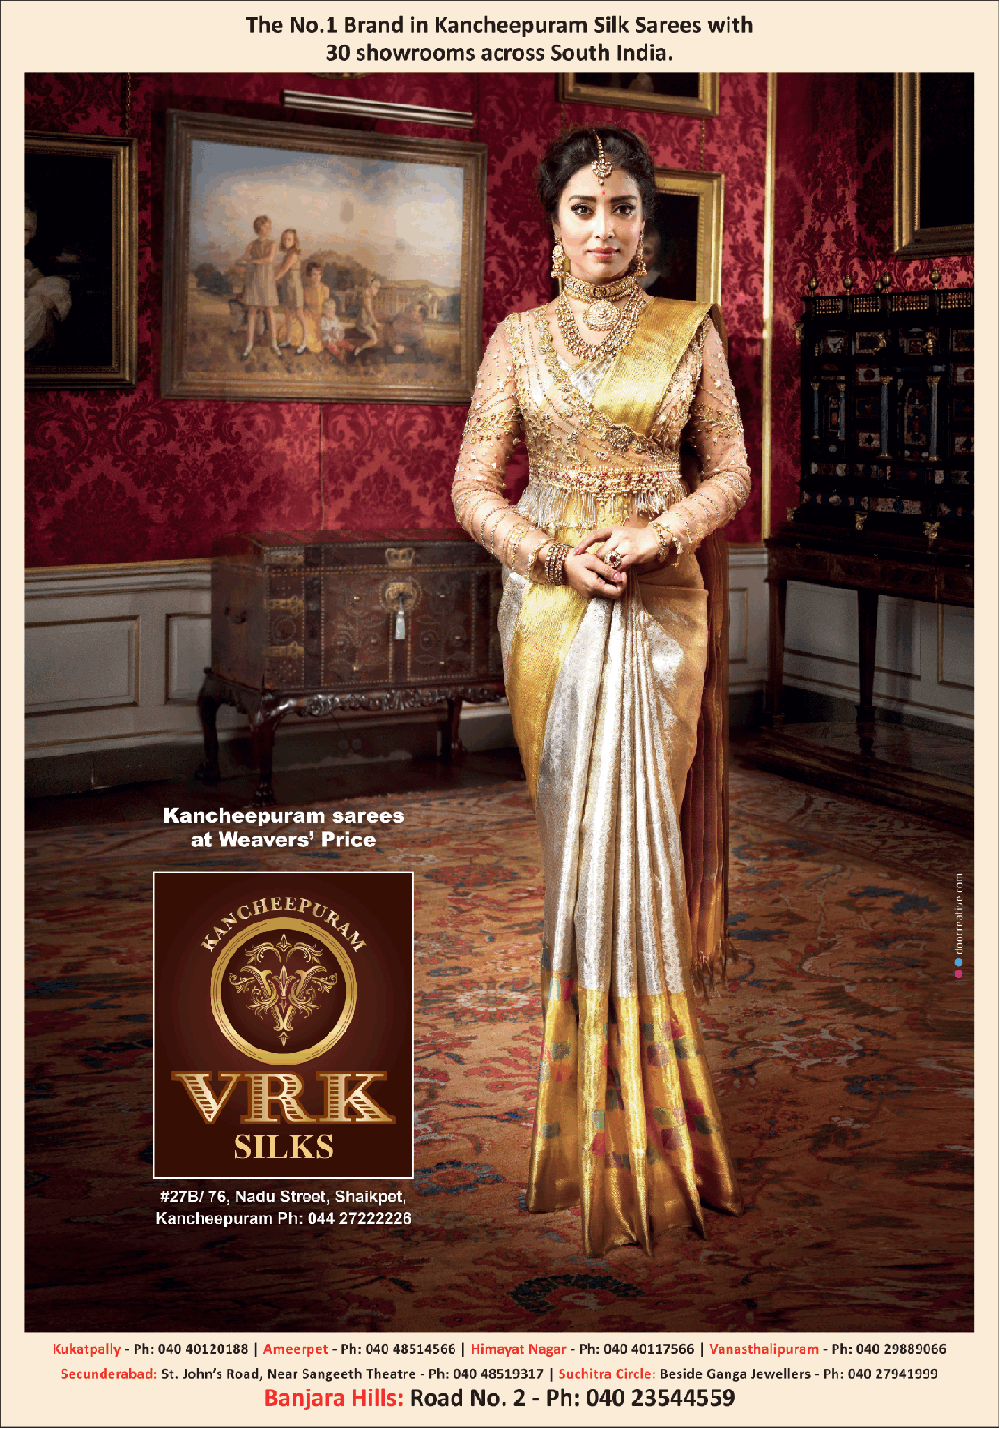 vrk-silks-kancheepuram-sarees-at-weavers-price-ad-times-of-india-hyderabad-27-01-2019.png